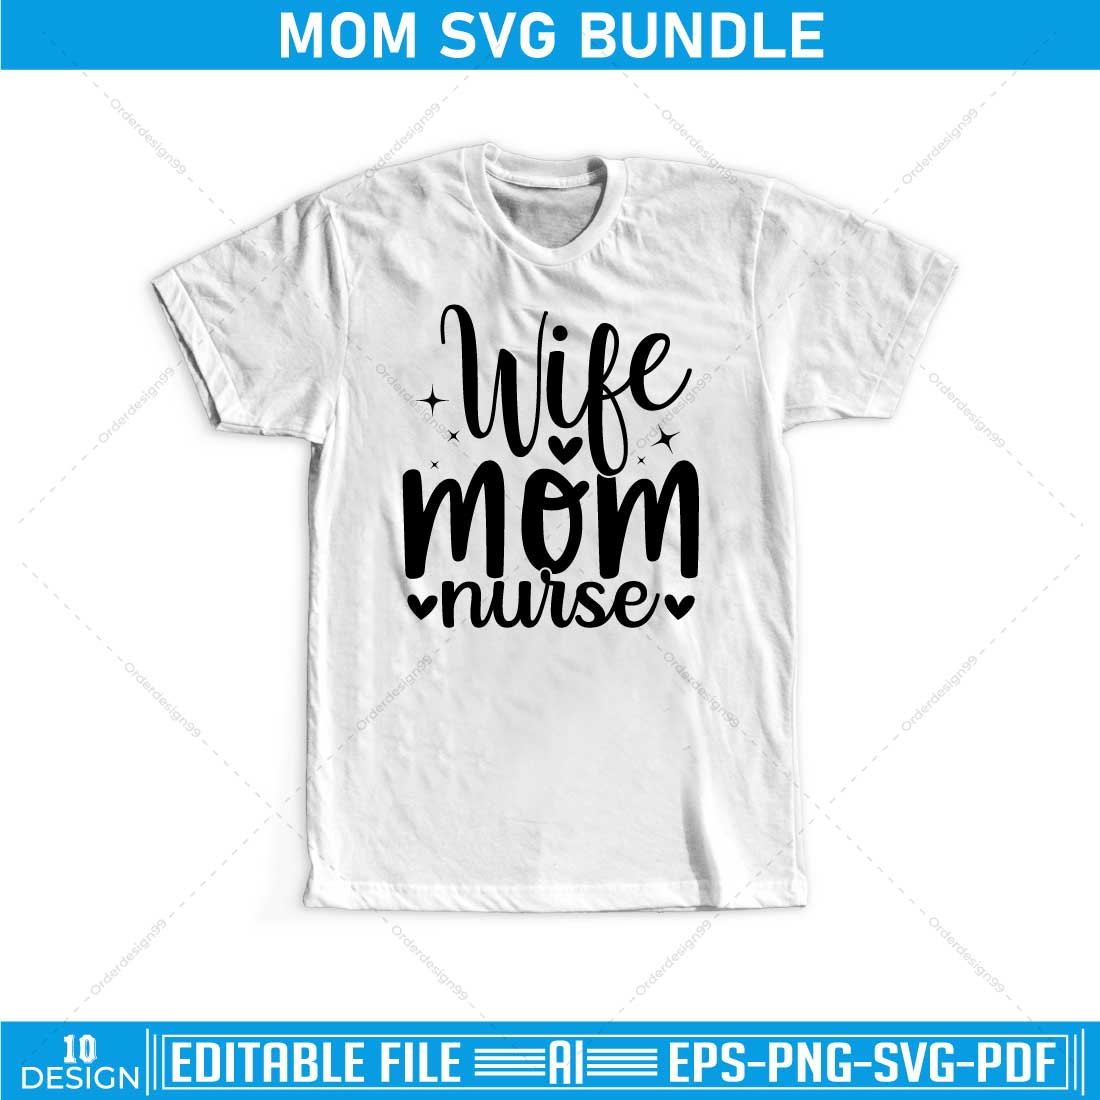 T - shirt that says wife mom nurse.